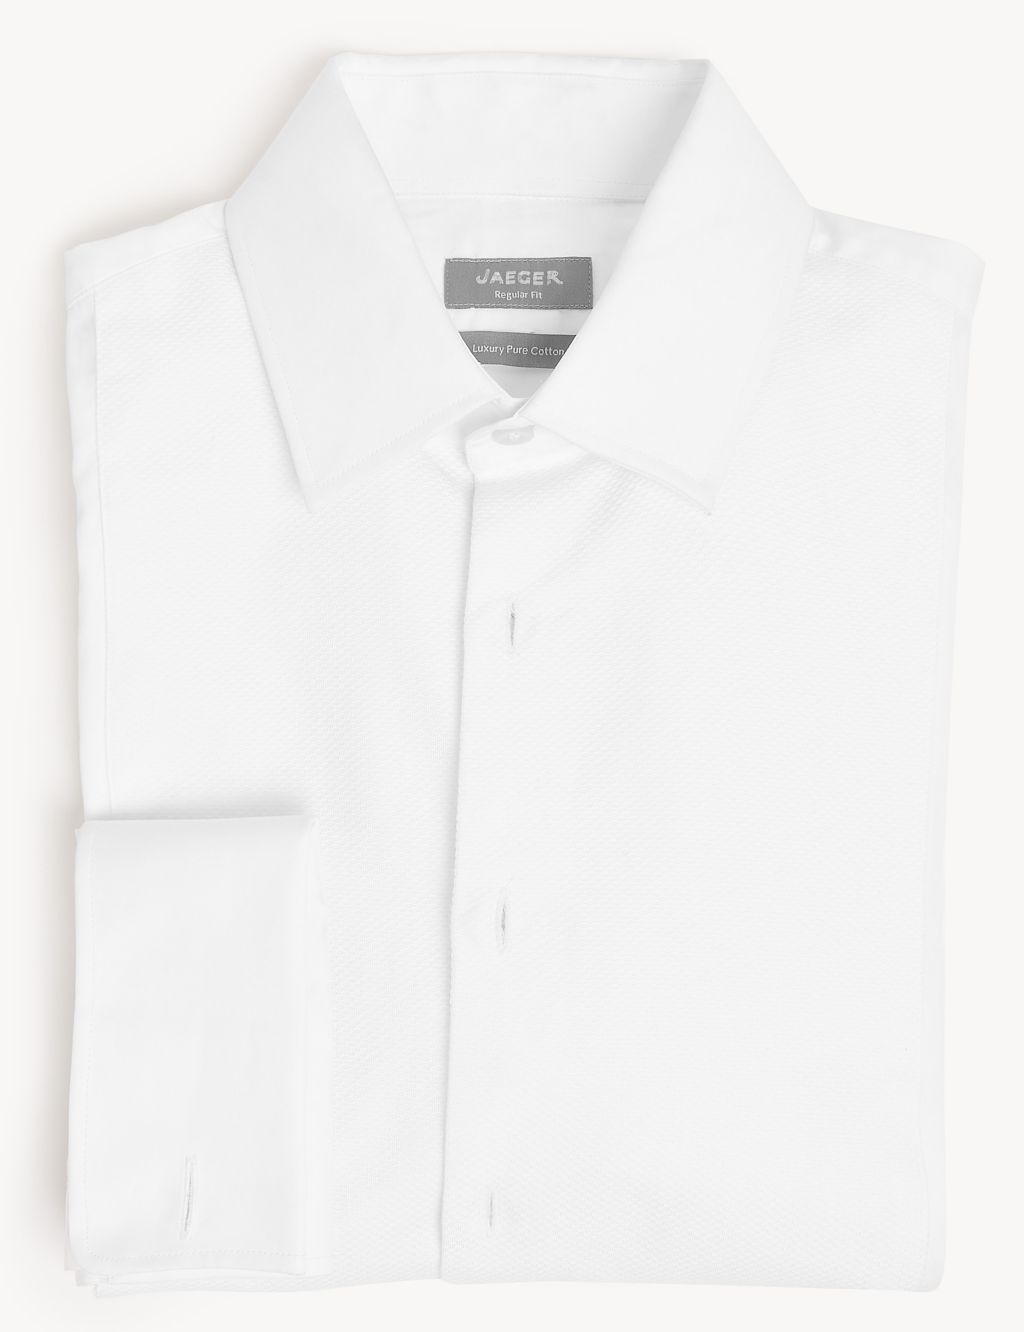 Regular Fit Cotton Marcella Bib Front Dress Shirt | JAEGER | M&S